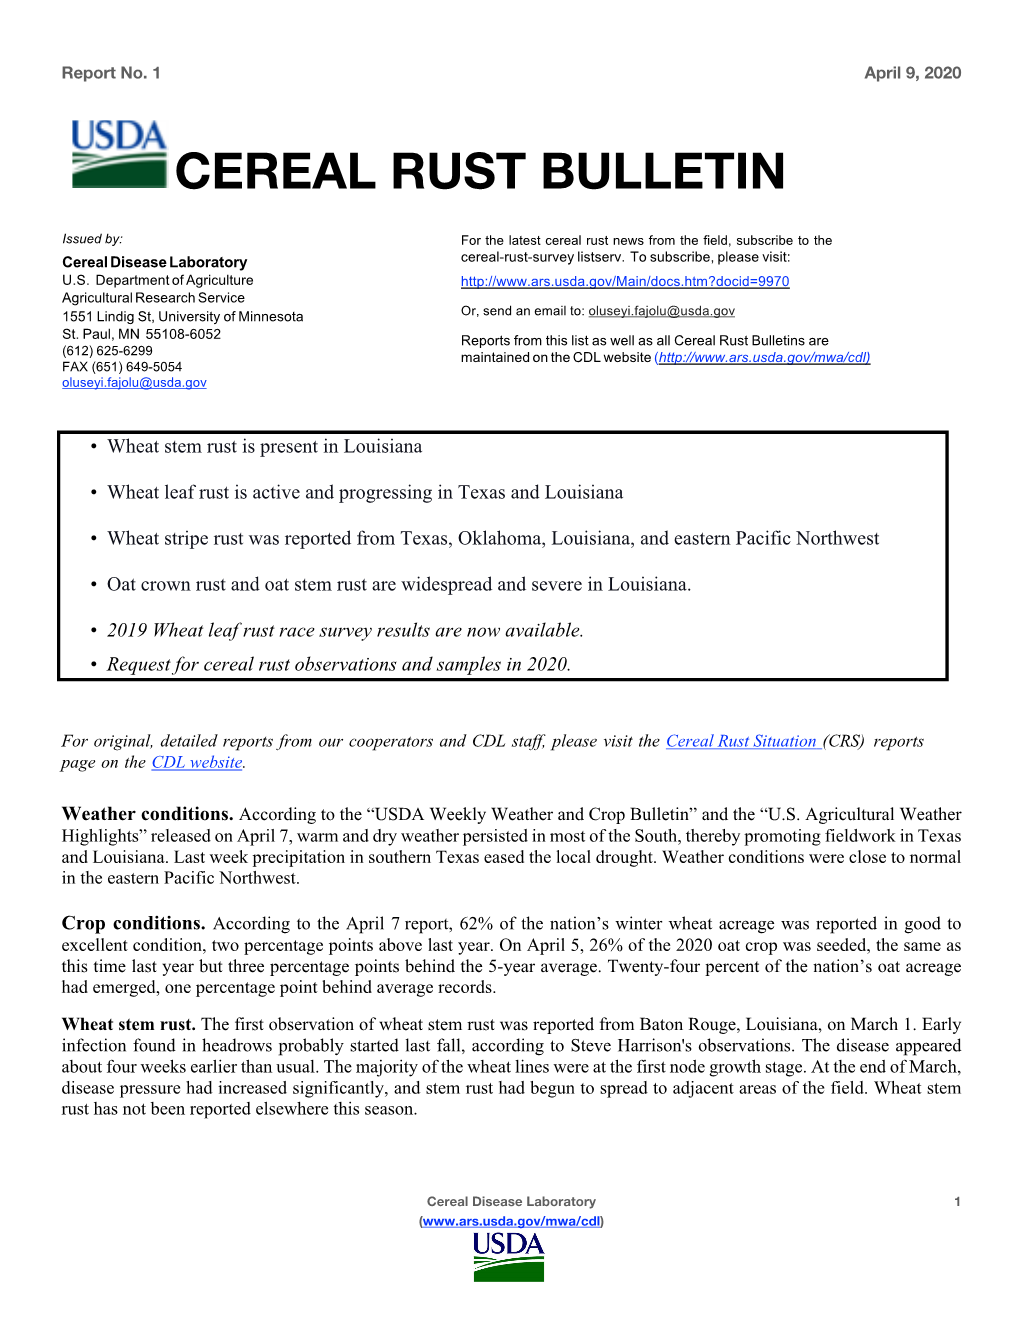 Cereal Rust Bulletin #1